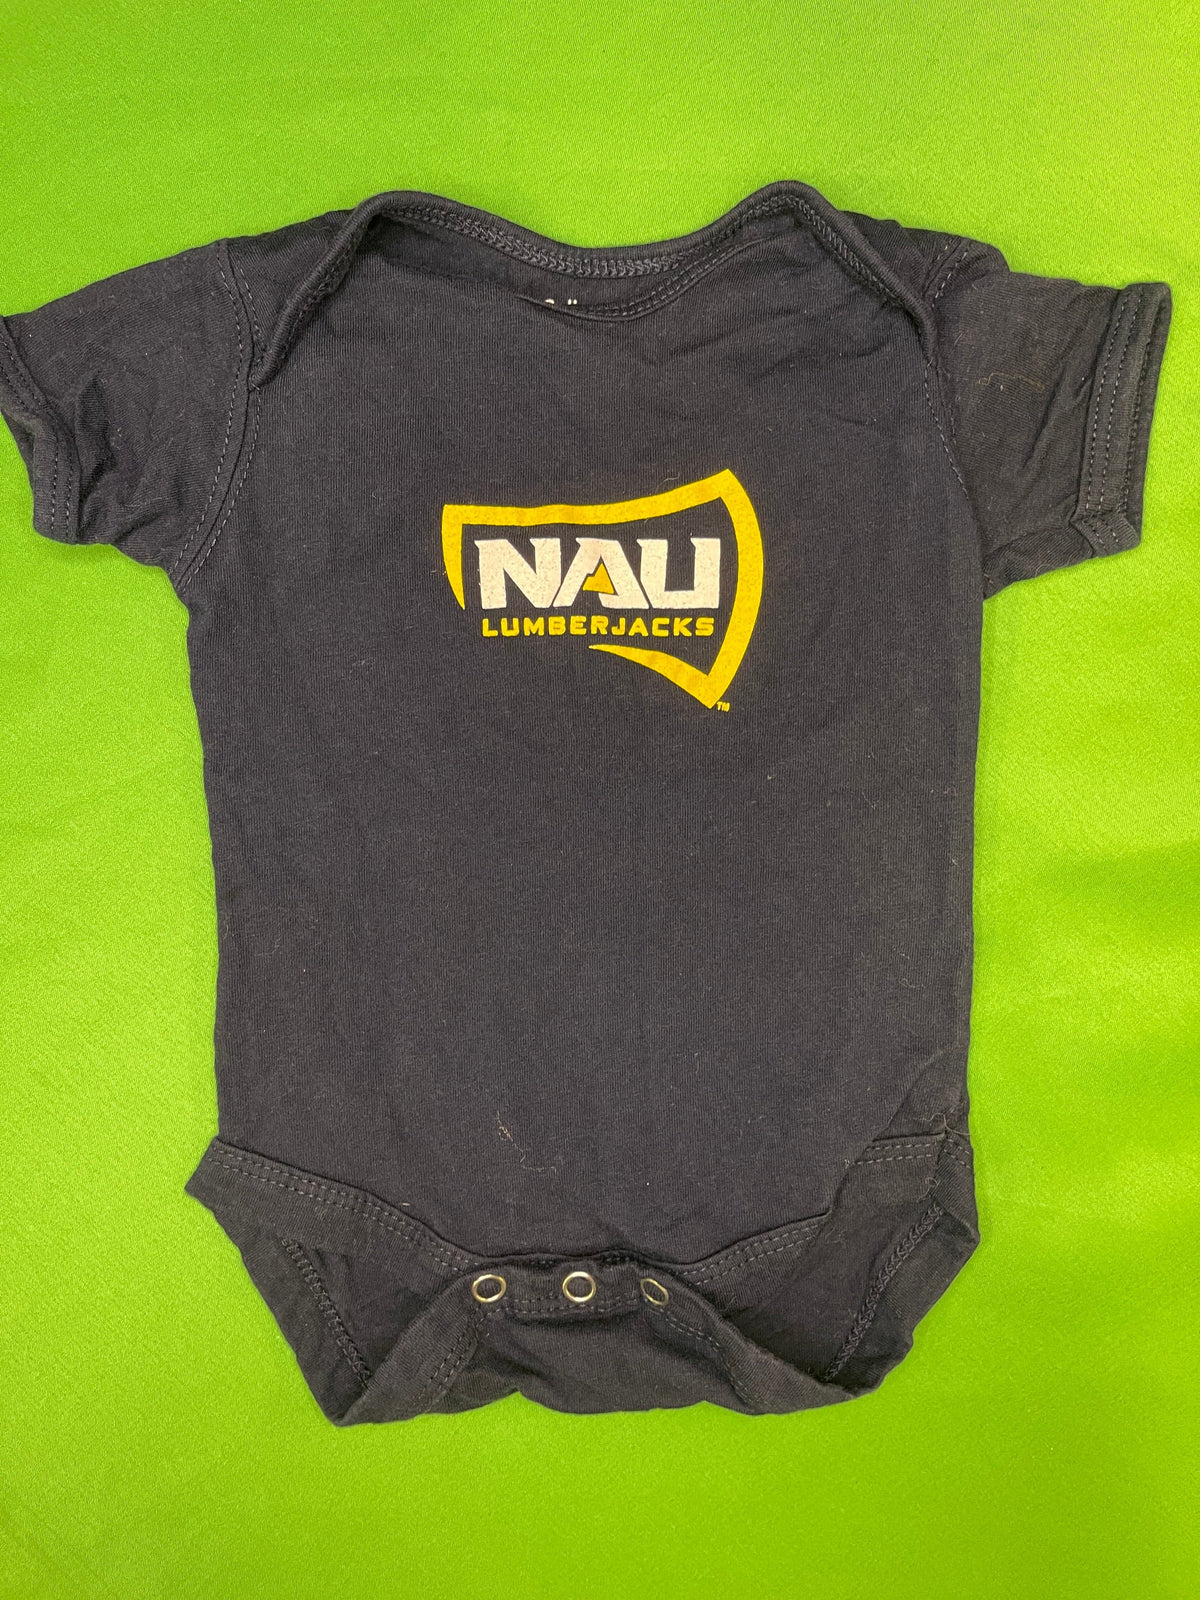 NCAA Northern Arizona Lumberjacks Baby Infant Bodysuit/Vest Newborn 0-3 Months